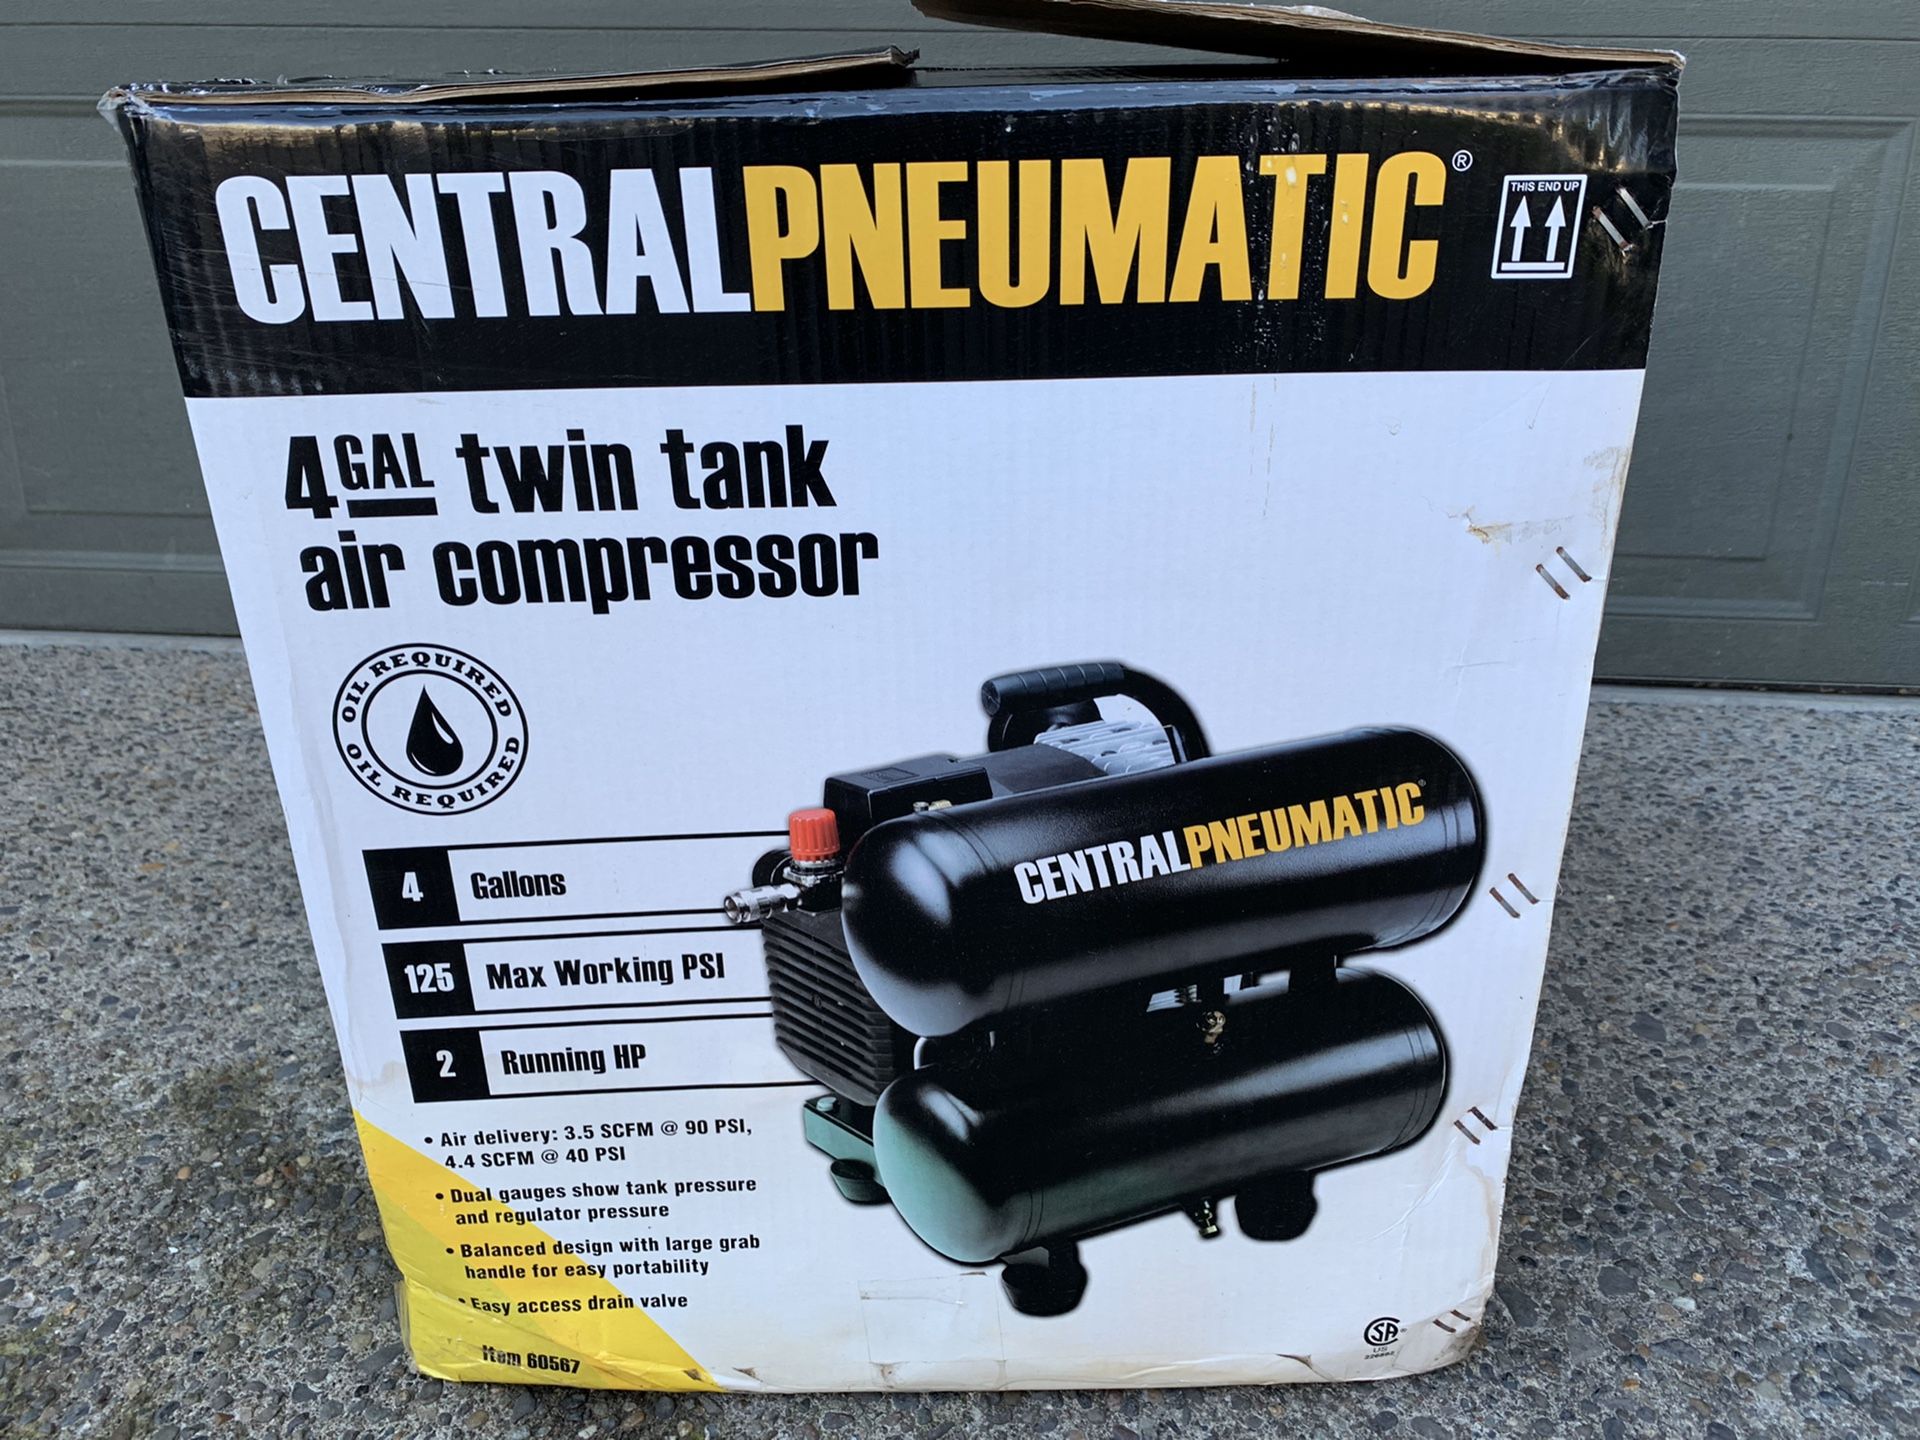 Central pneumatic 4 gallon twin tank air compressor